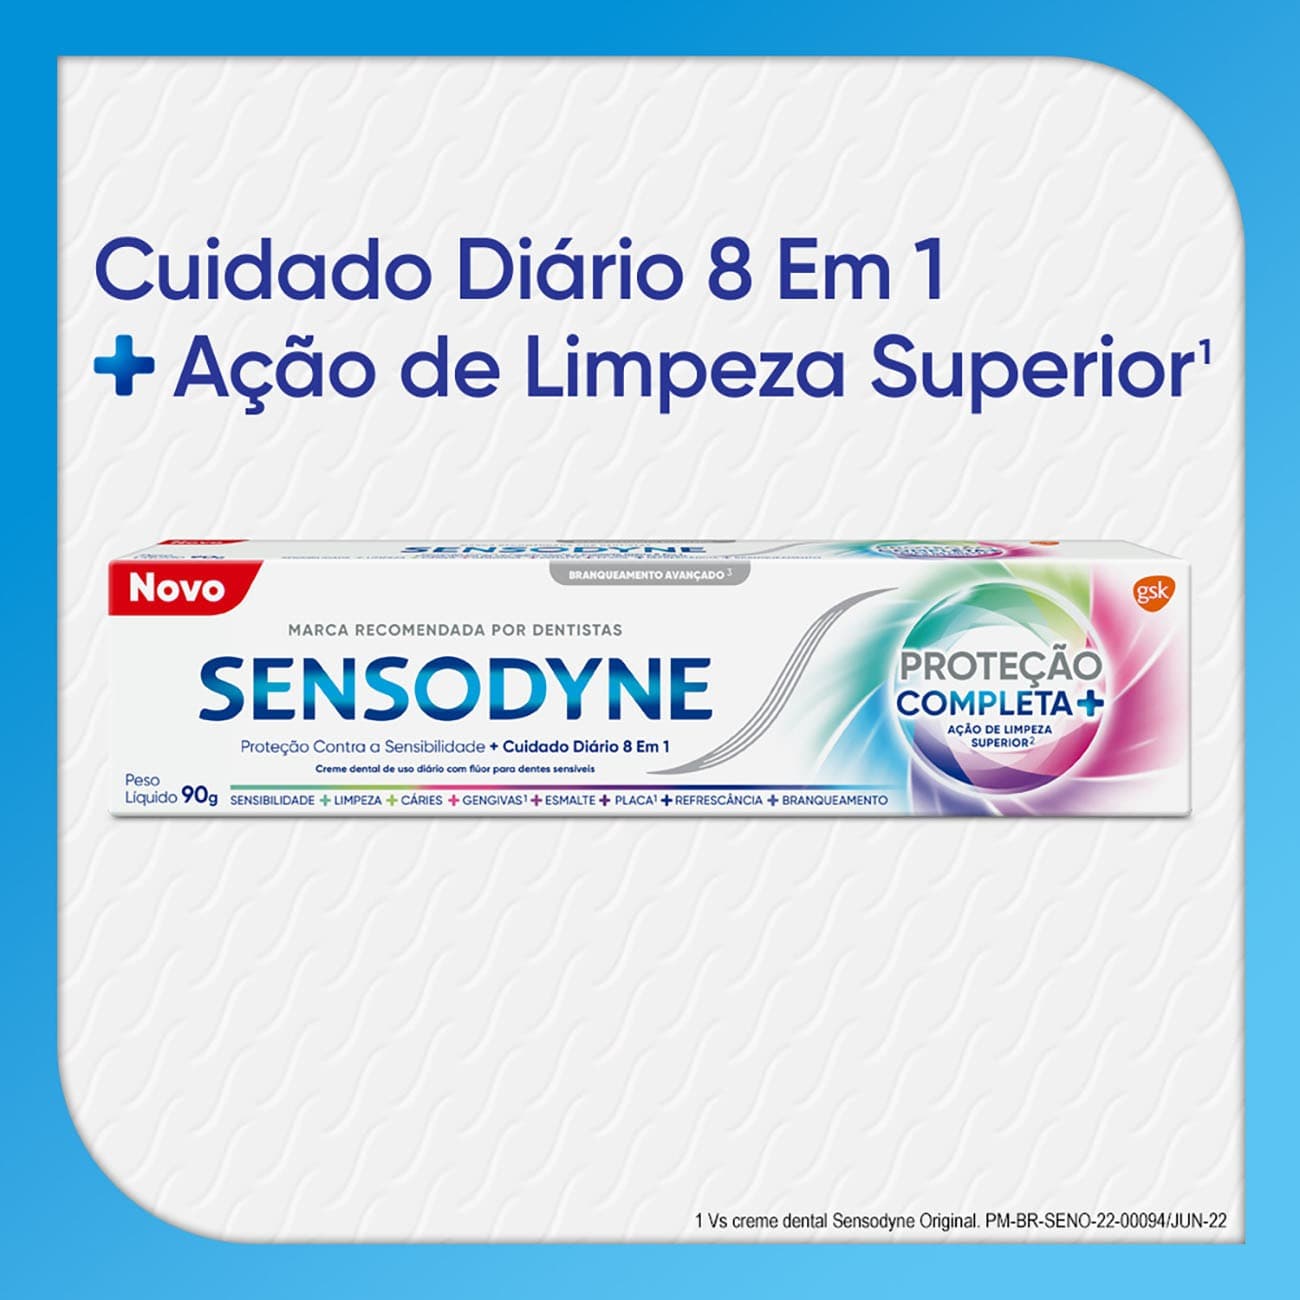 Sensodyne Proteo Completa+ Creme Dental 90g